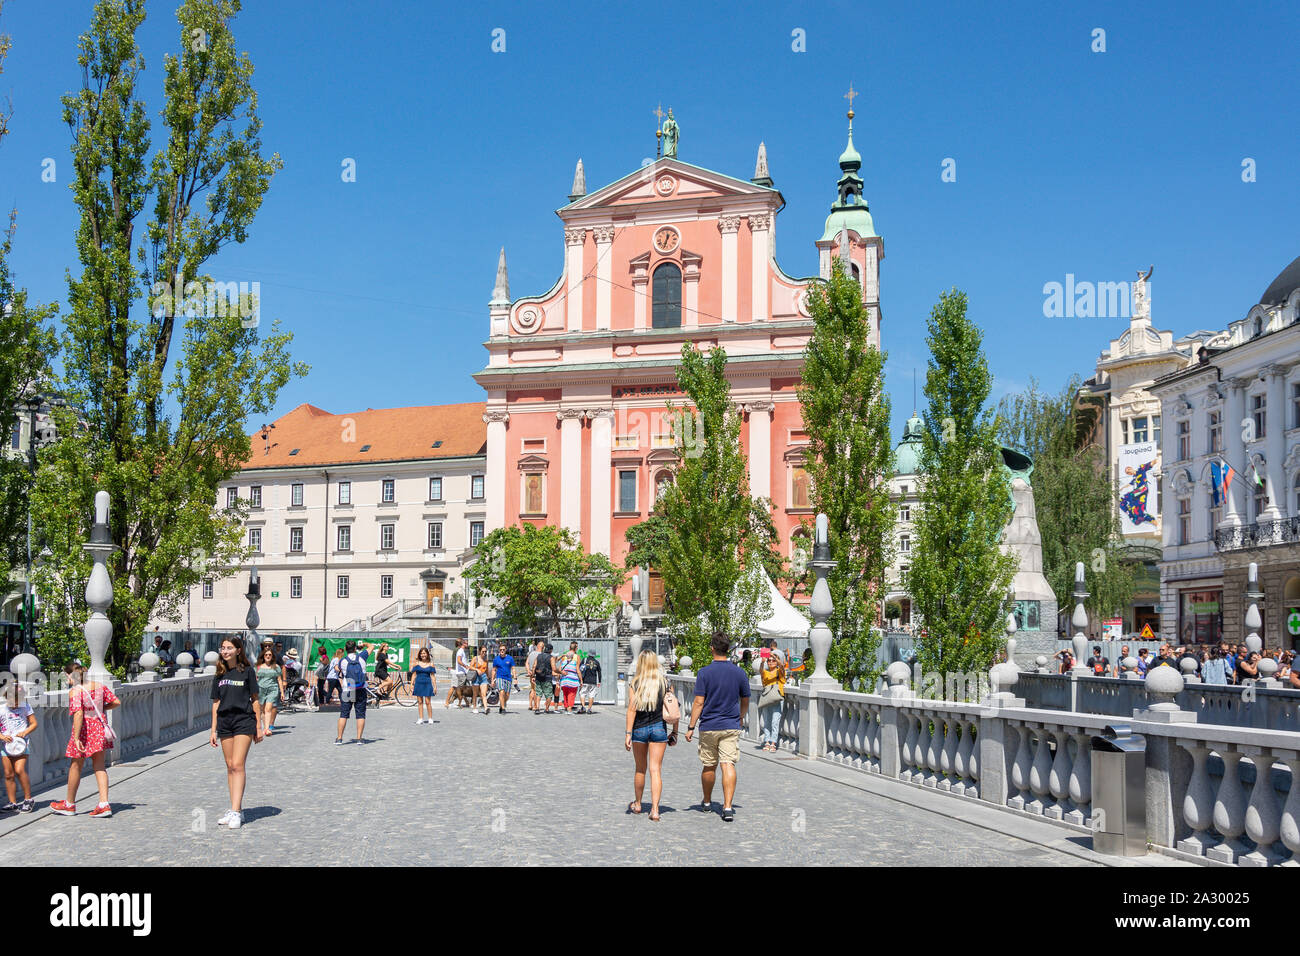 Franciscan Church of the Annunciation and Triple Bridges, Preseren Square, Old Town, Ljubljana, Slovenia Stock Photo